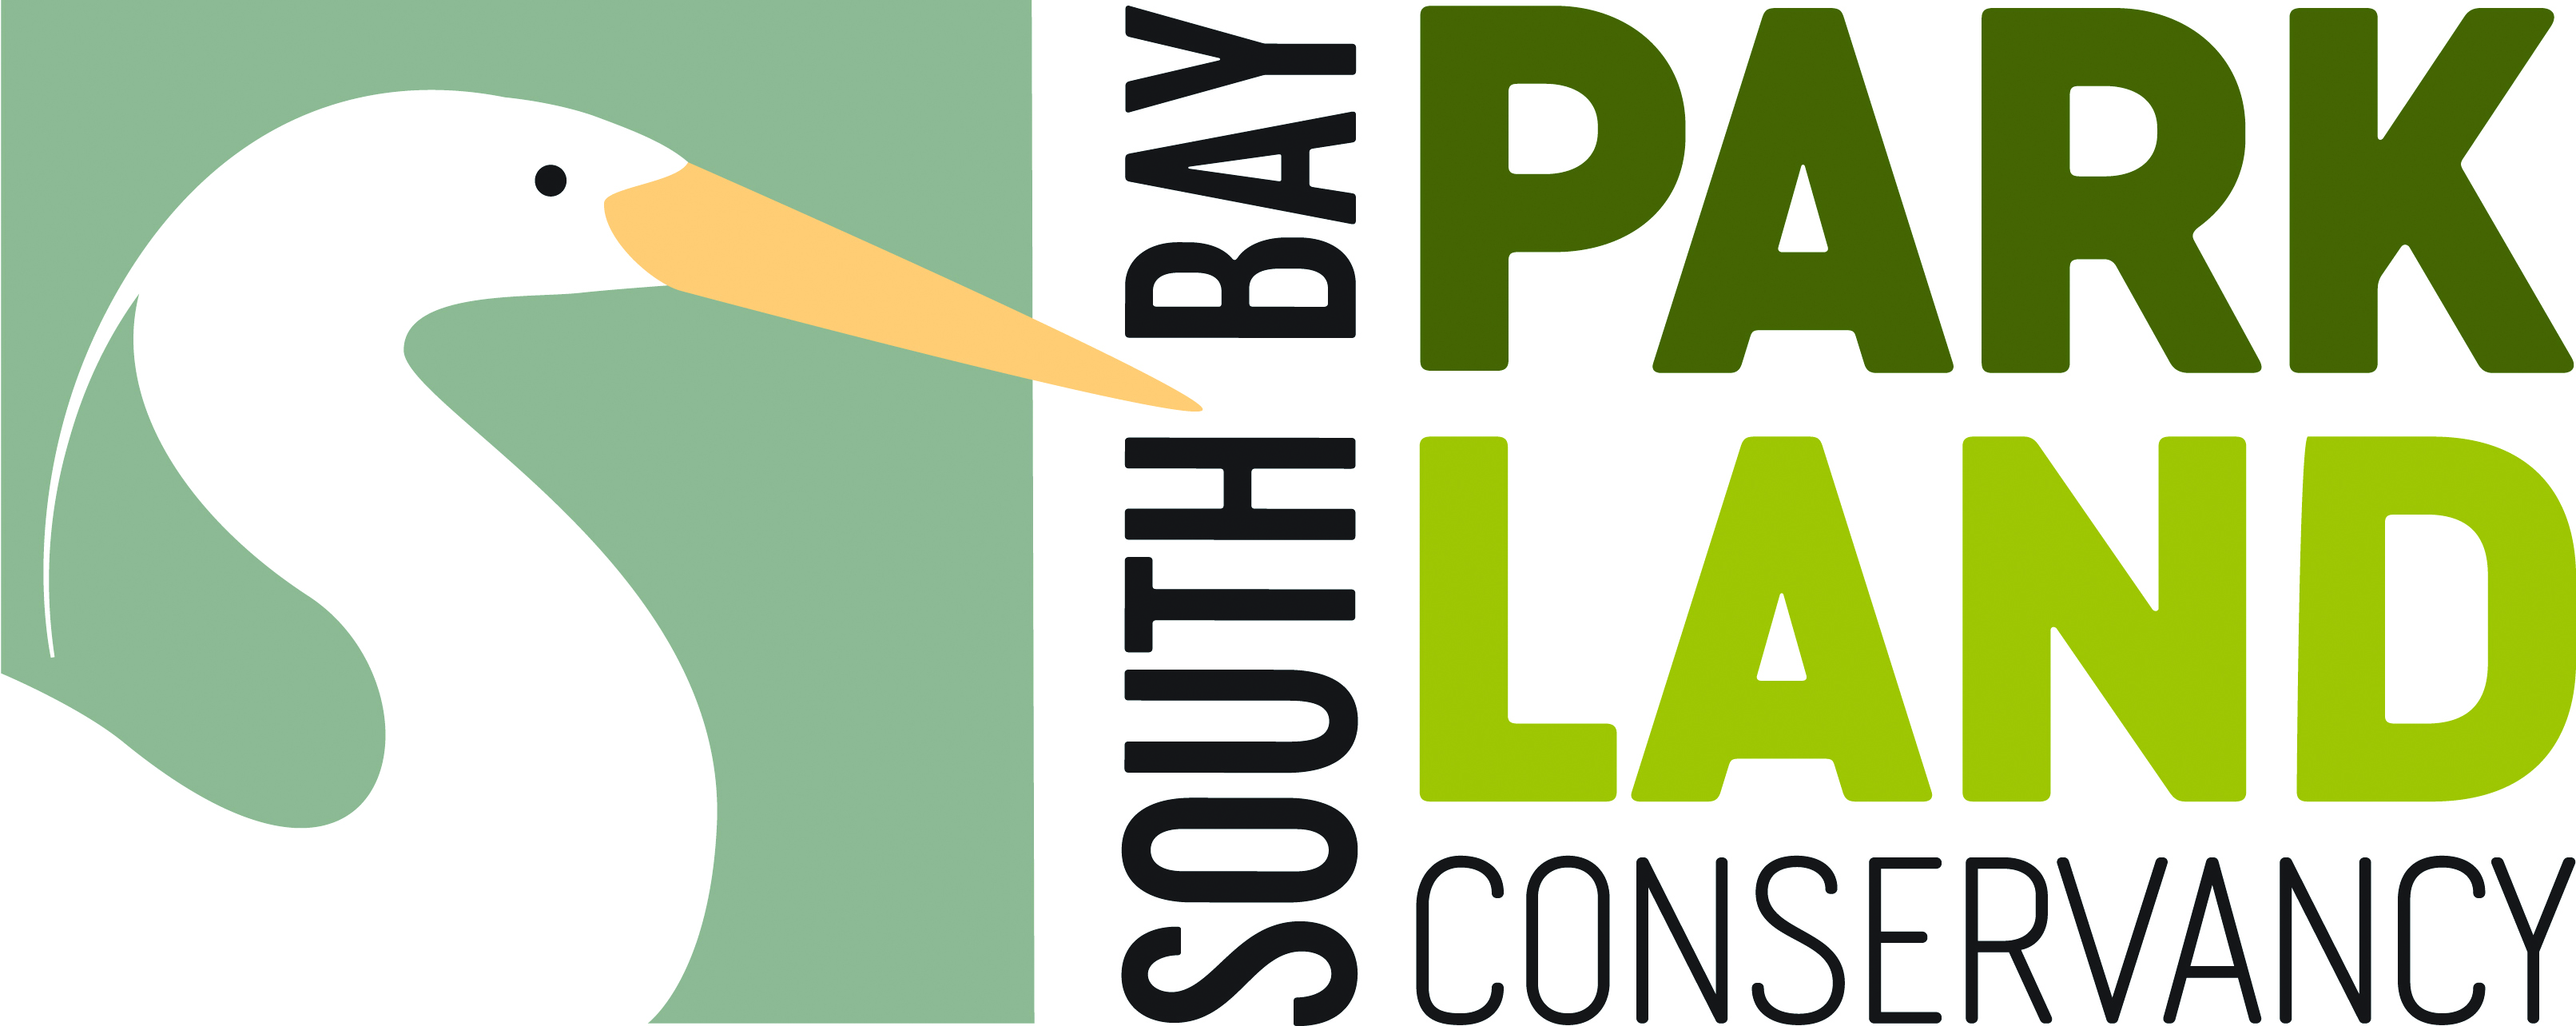 South Bay Parkland Conservancy